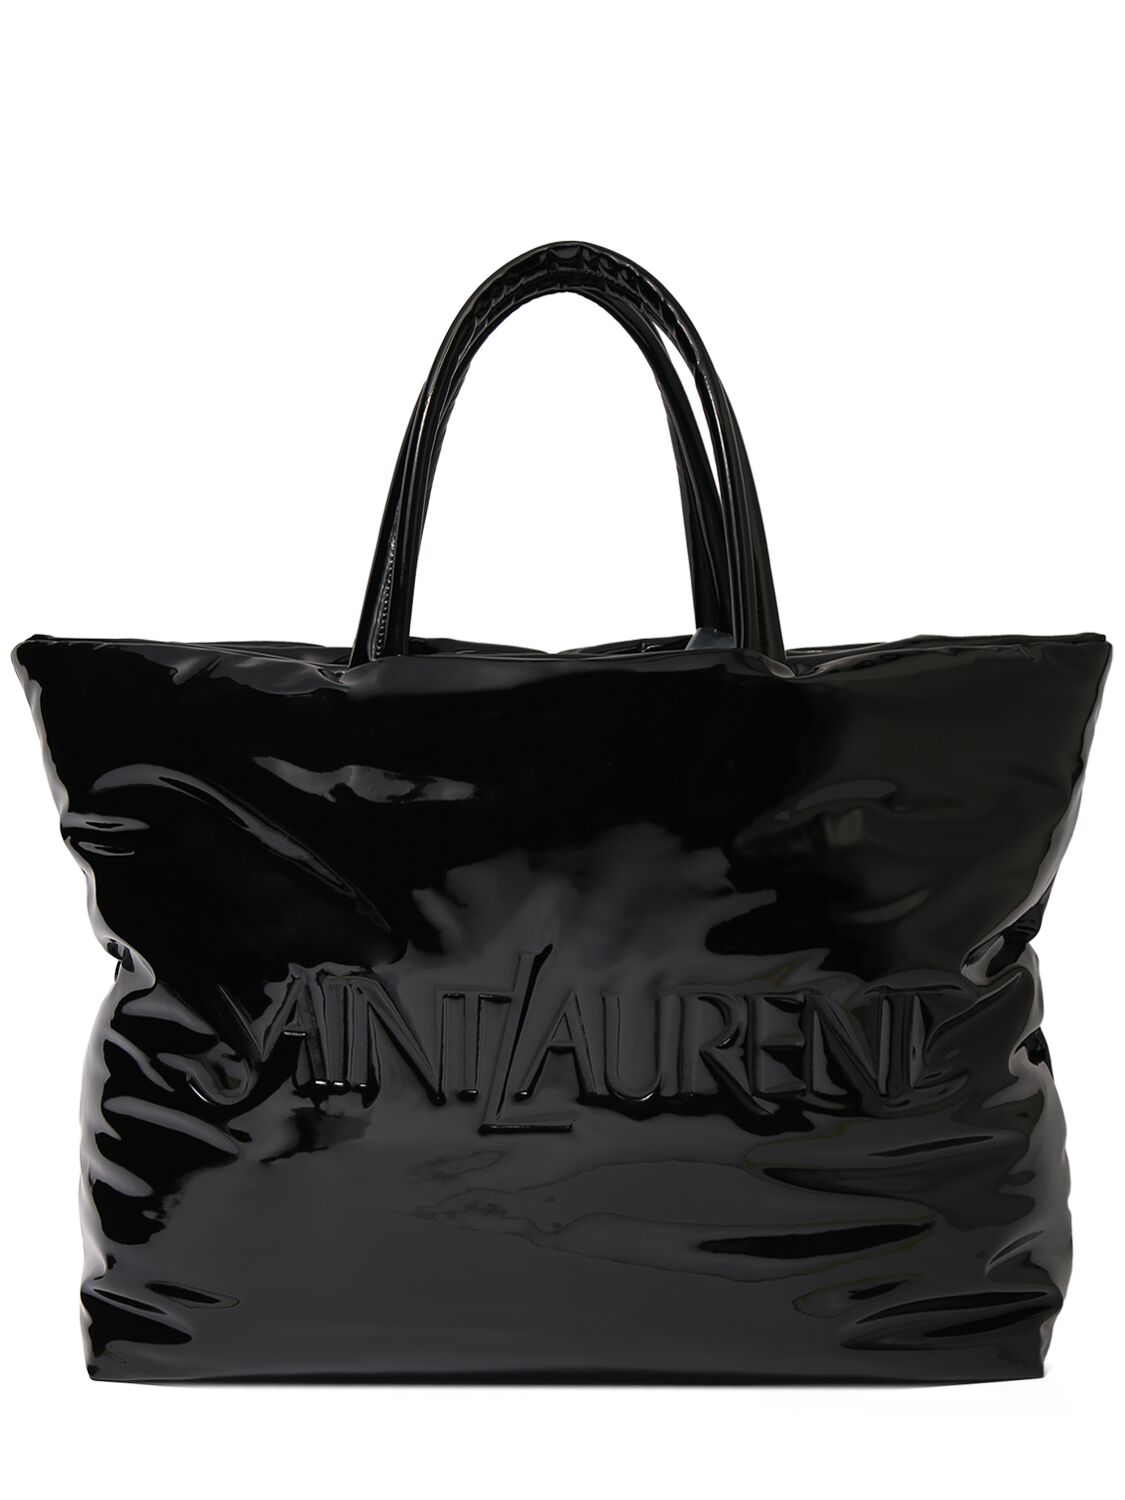 Saint Laurent Maxi Patent Tote Bag In Black